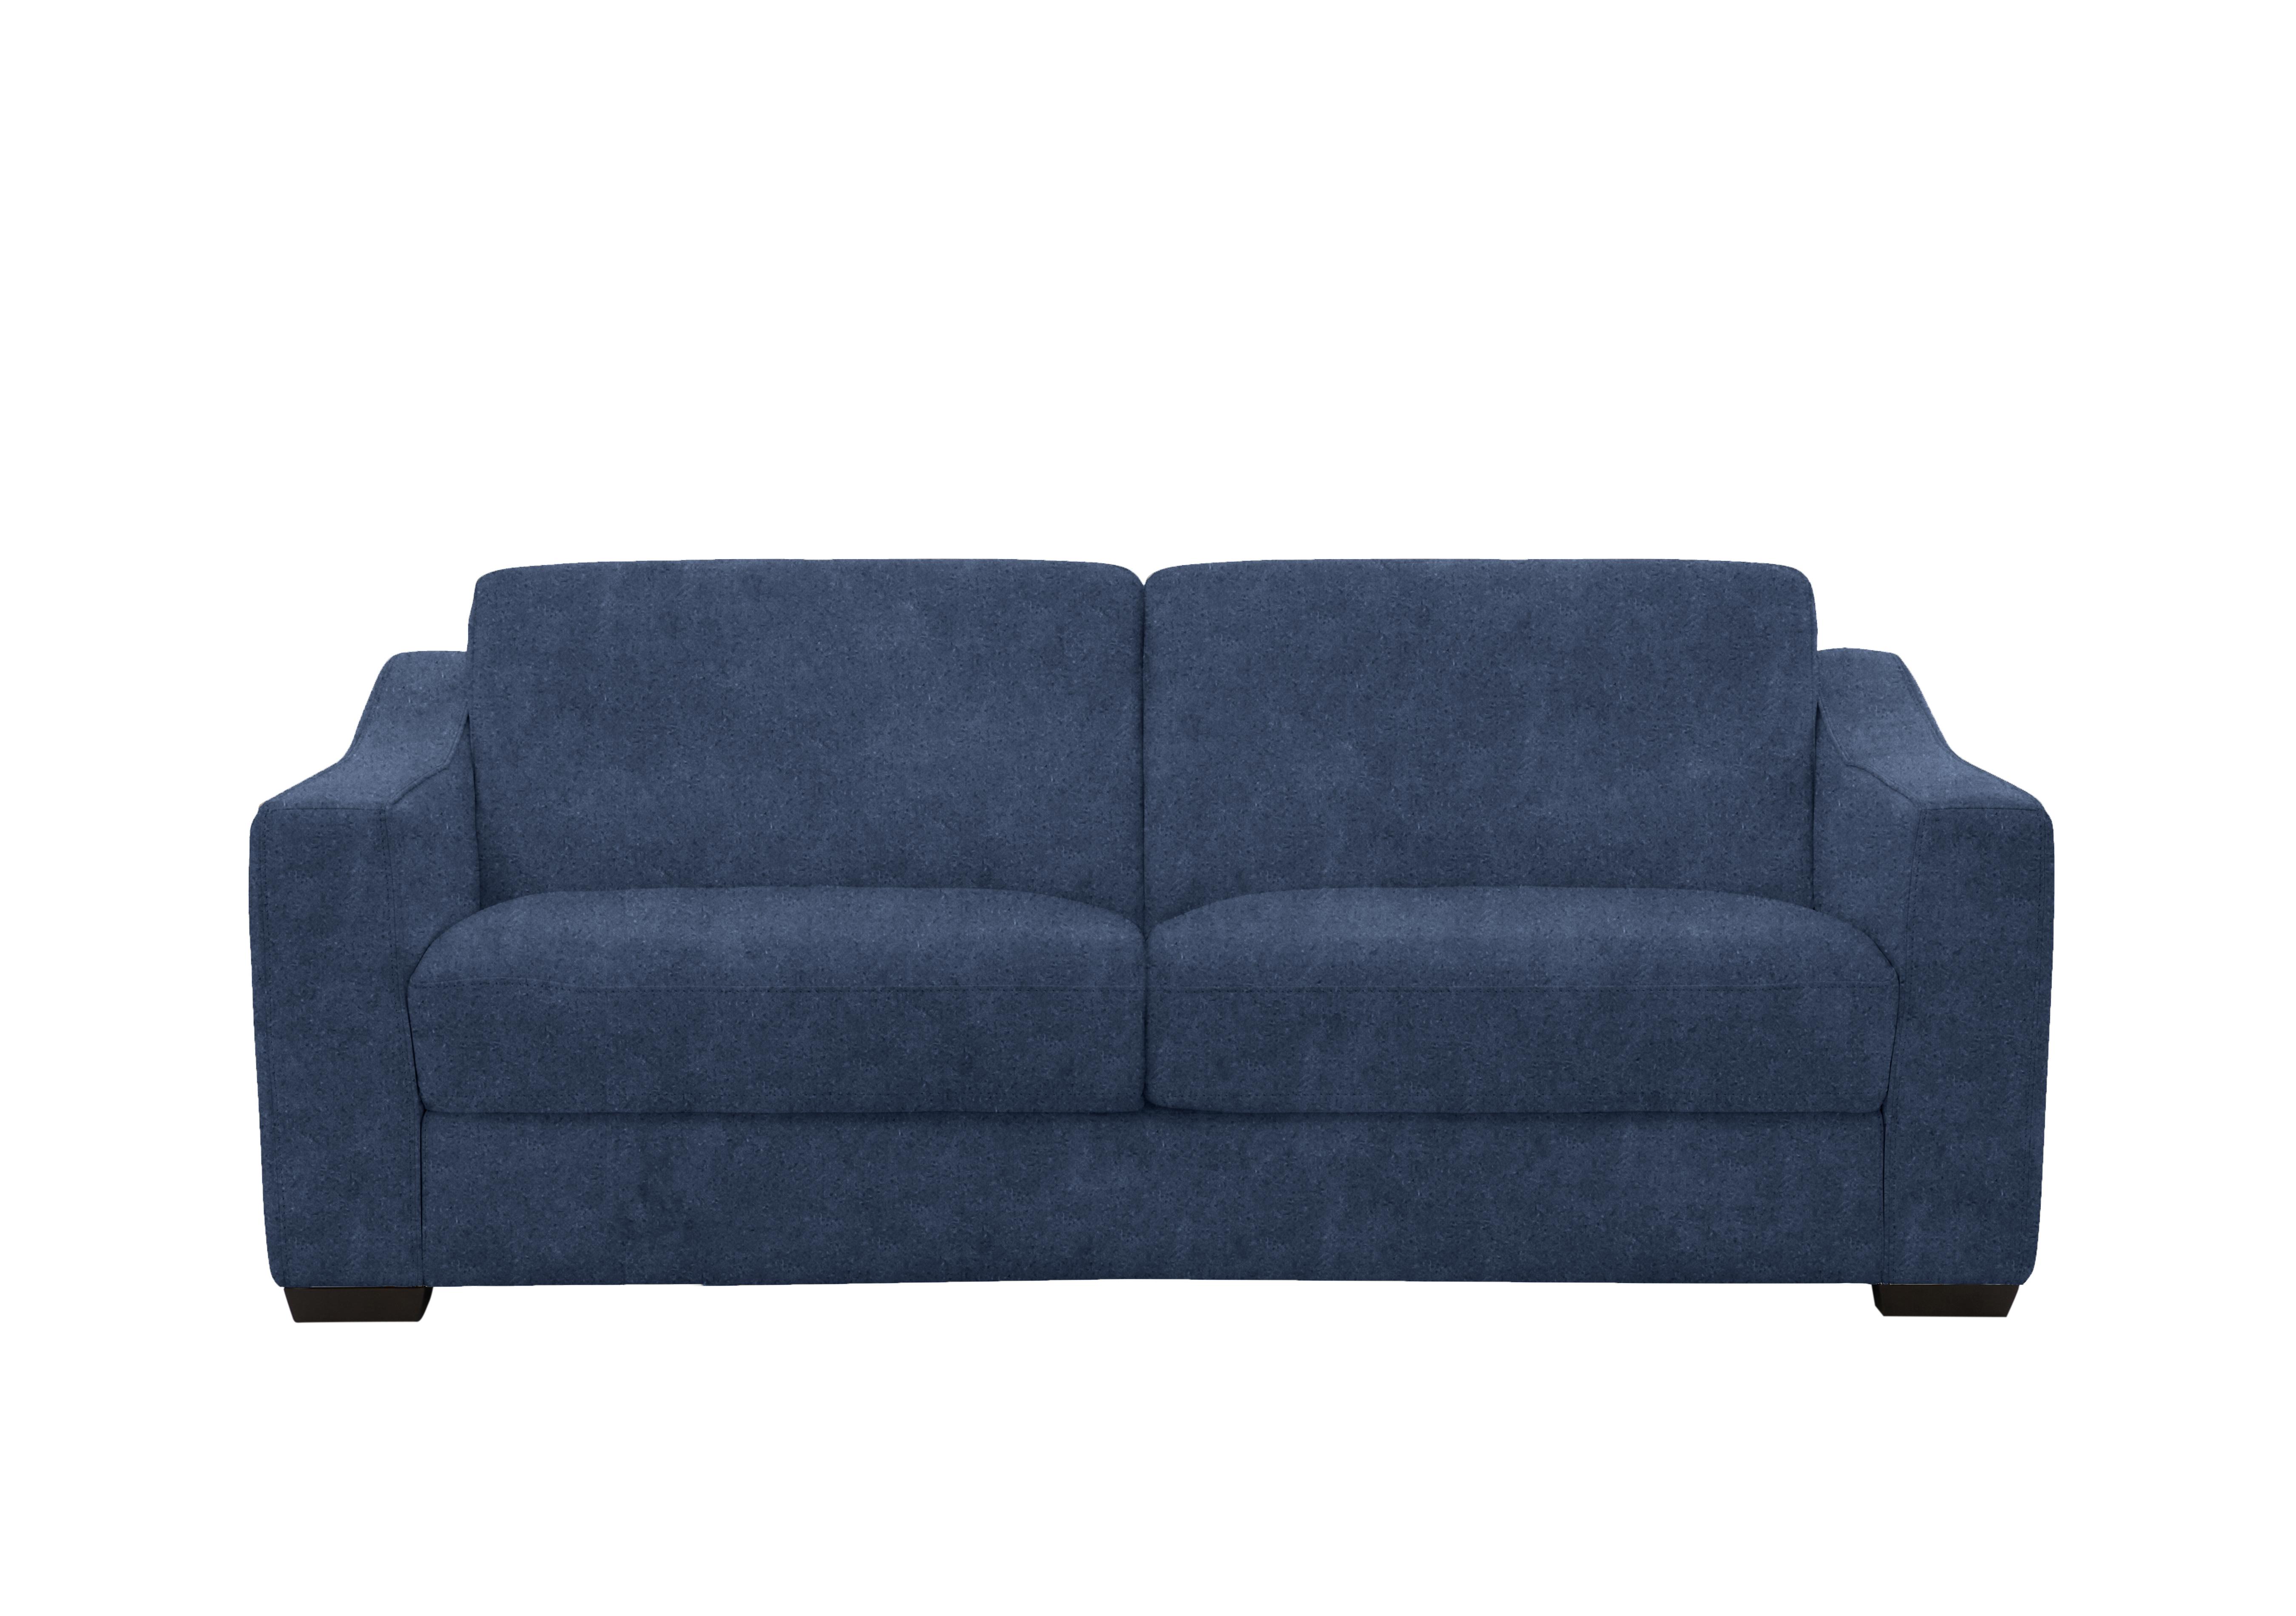 Optimus 3 Seater Fabric Sofa in Bfa-Blj-R10 Blue on Furniture Village